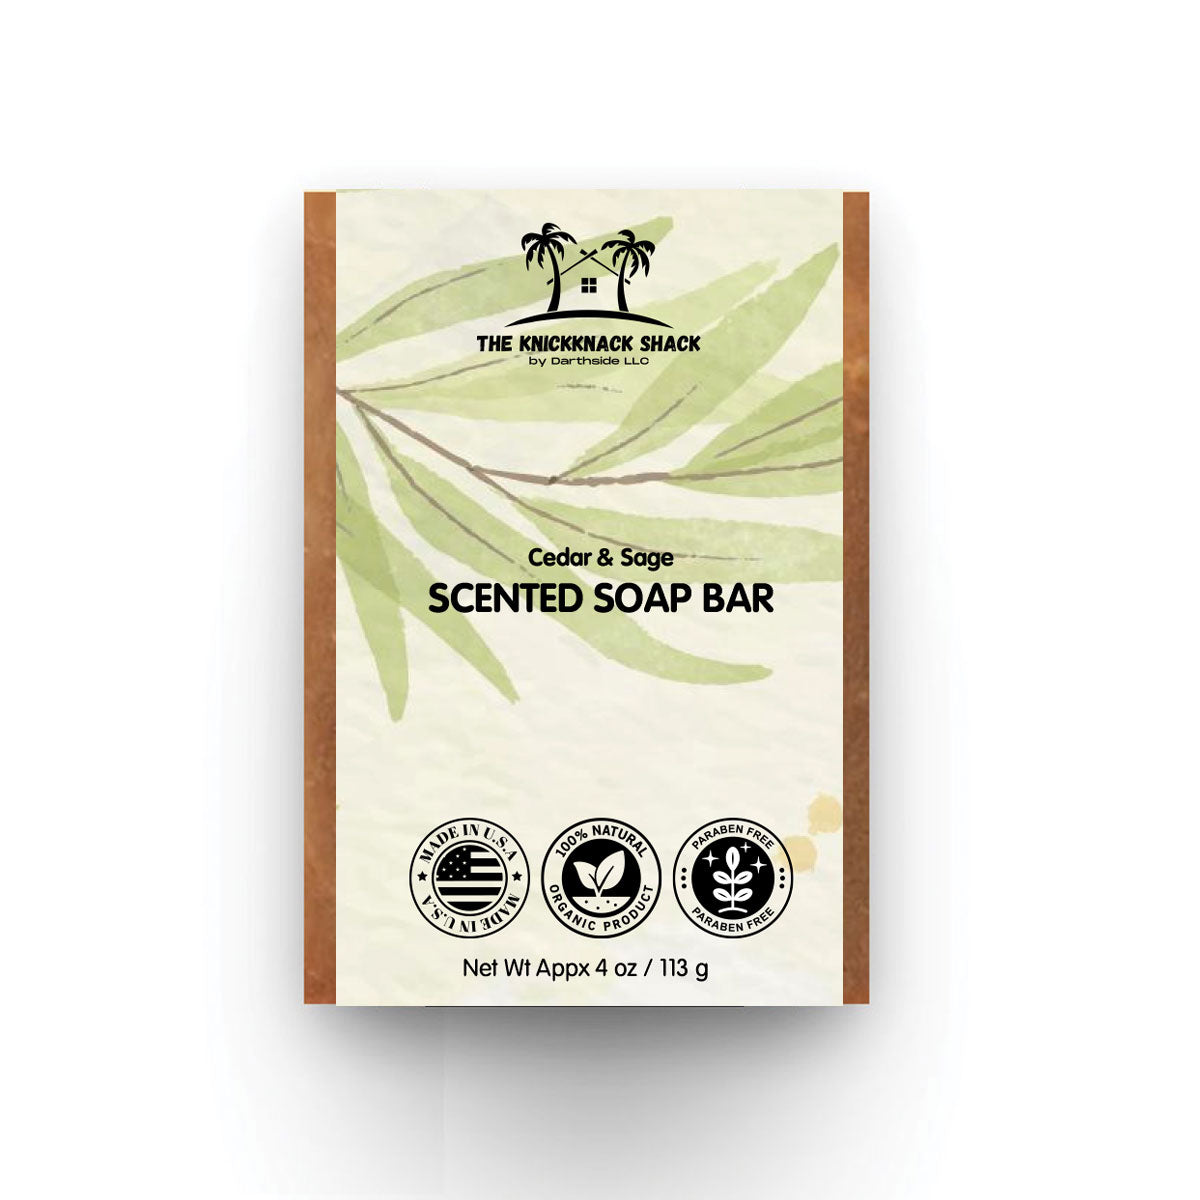 Cedar & Sage Scented Soap Bar